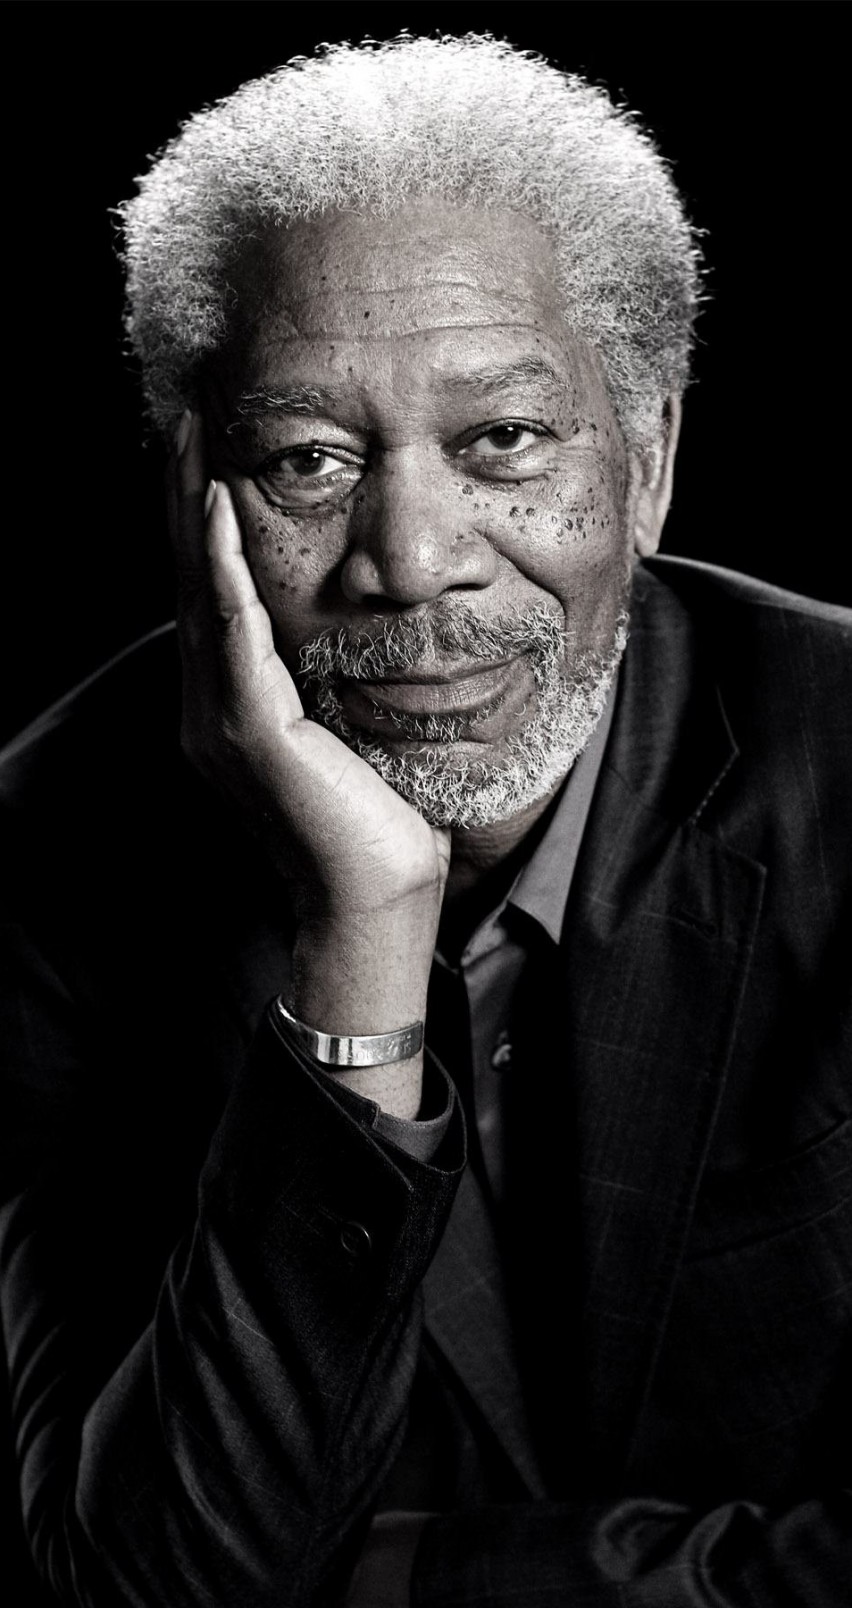 Morgan Freeman Portrait Wallpaper for Apple iPhone 6 / 6s